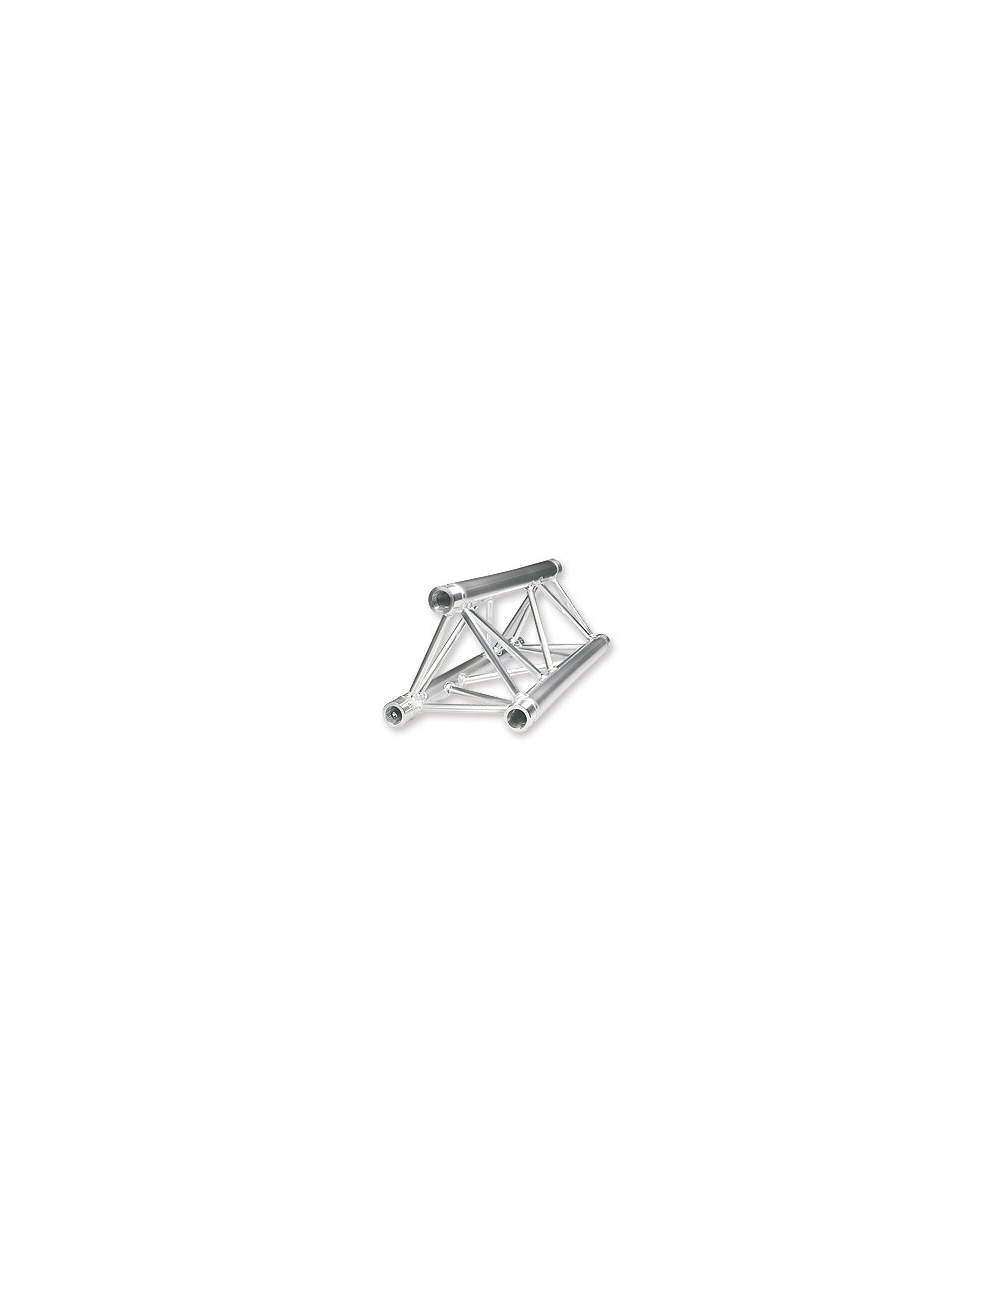 Triangular structure 290 ASD 0m50 - SX29050